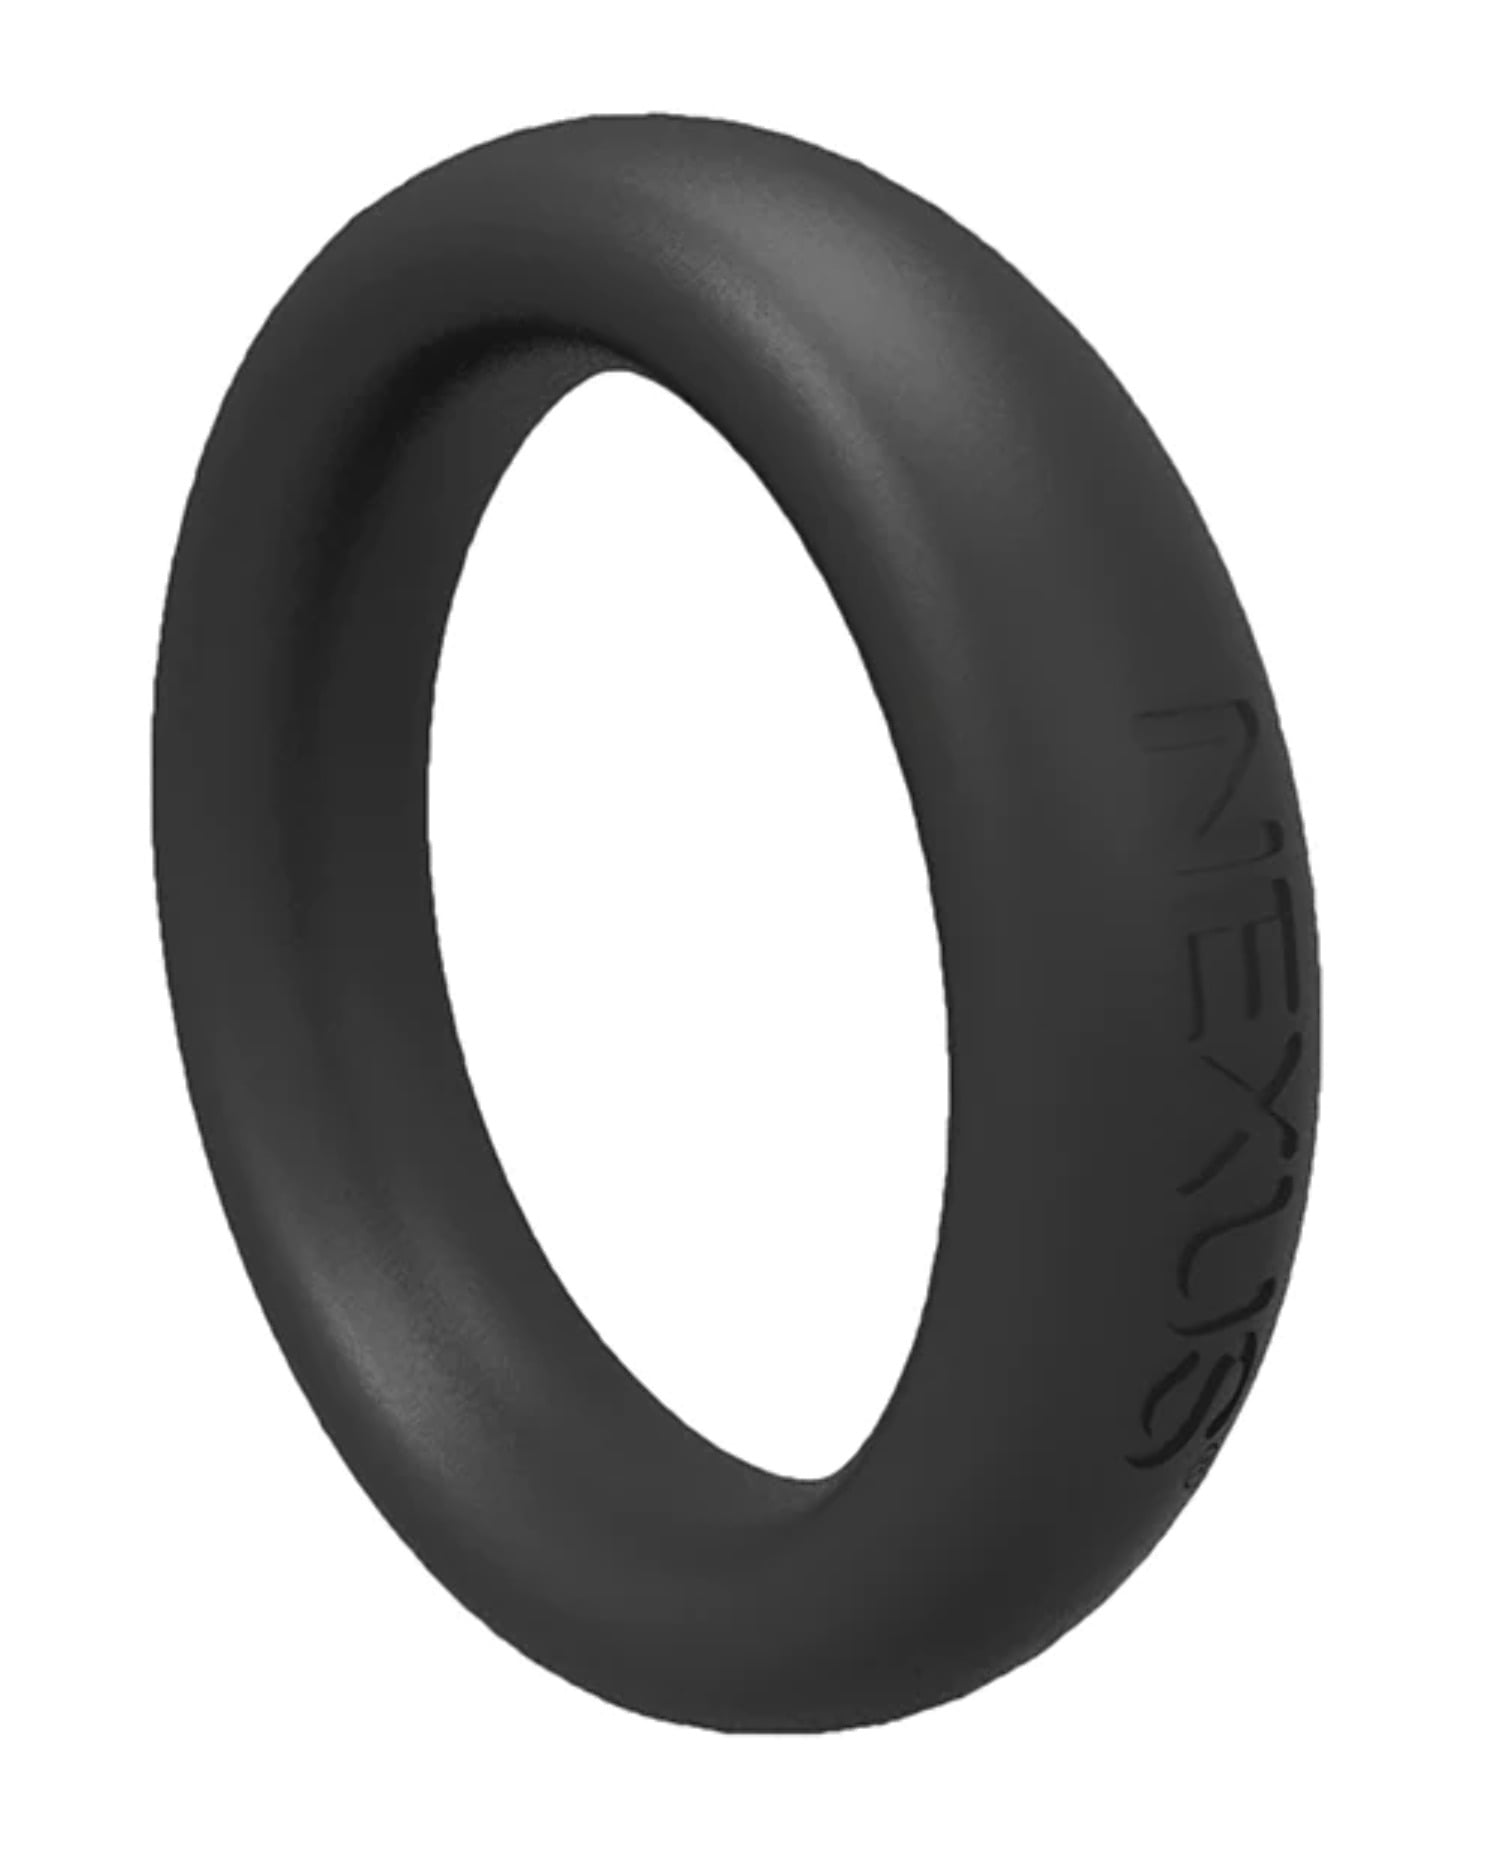 Nexus Enduro Silicone Cock Ring - Black by Libertybelle marketing